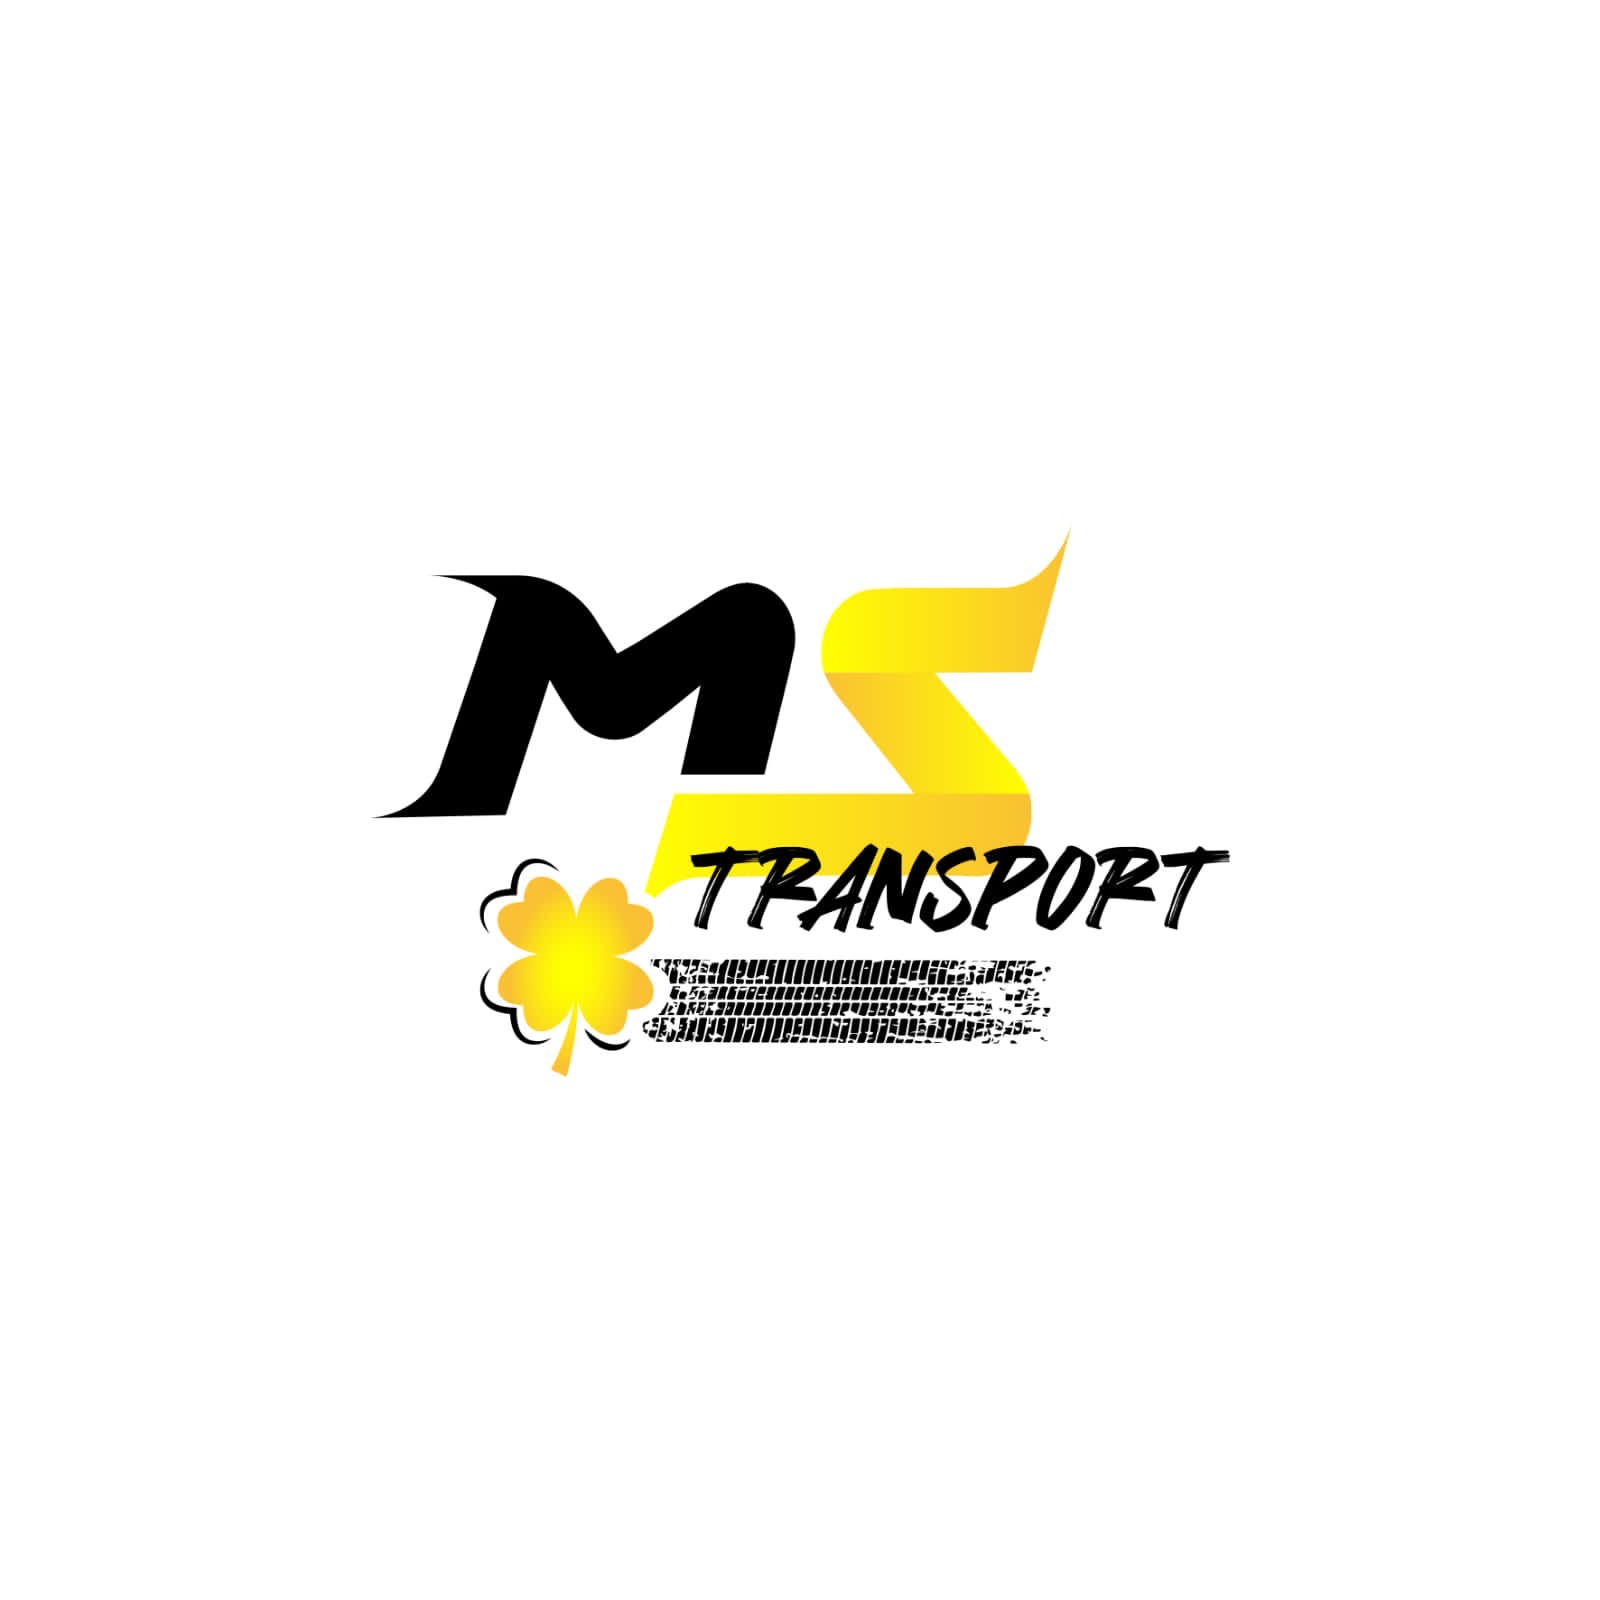 MS TRANSPORT